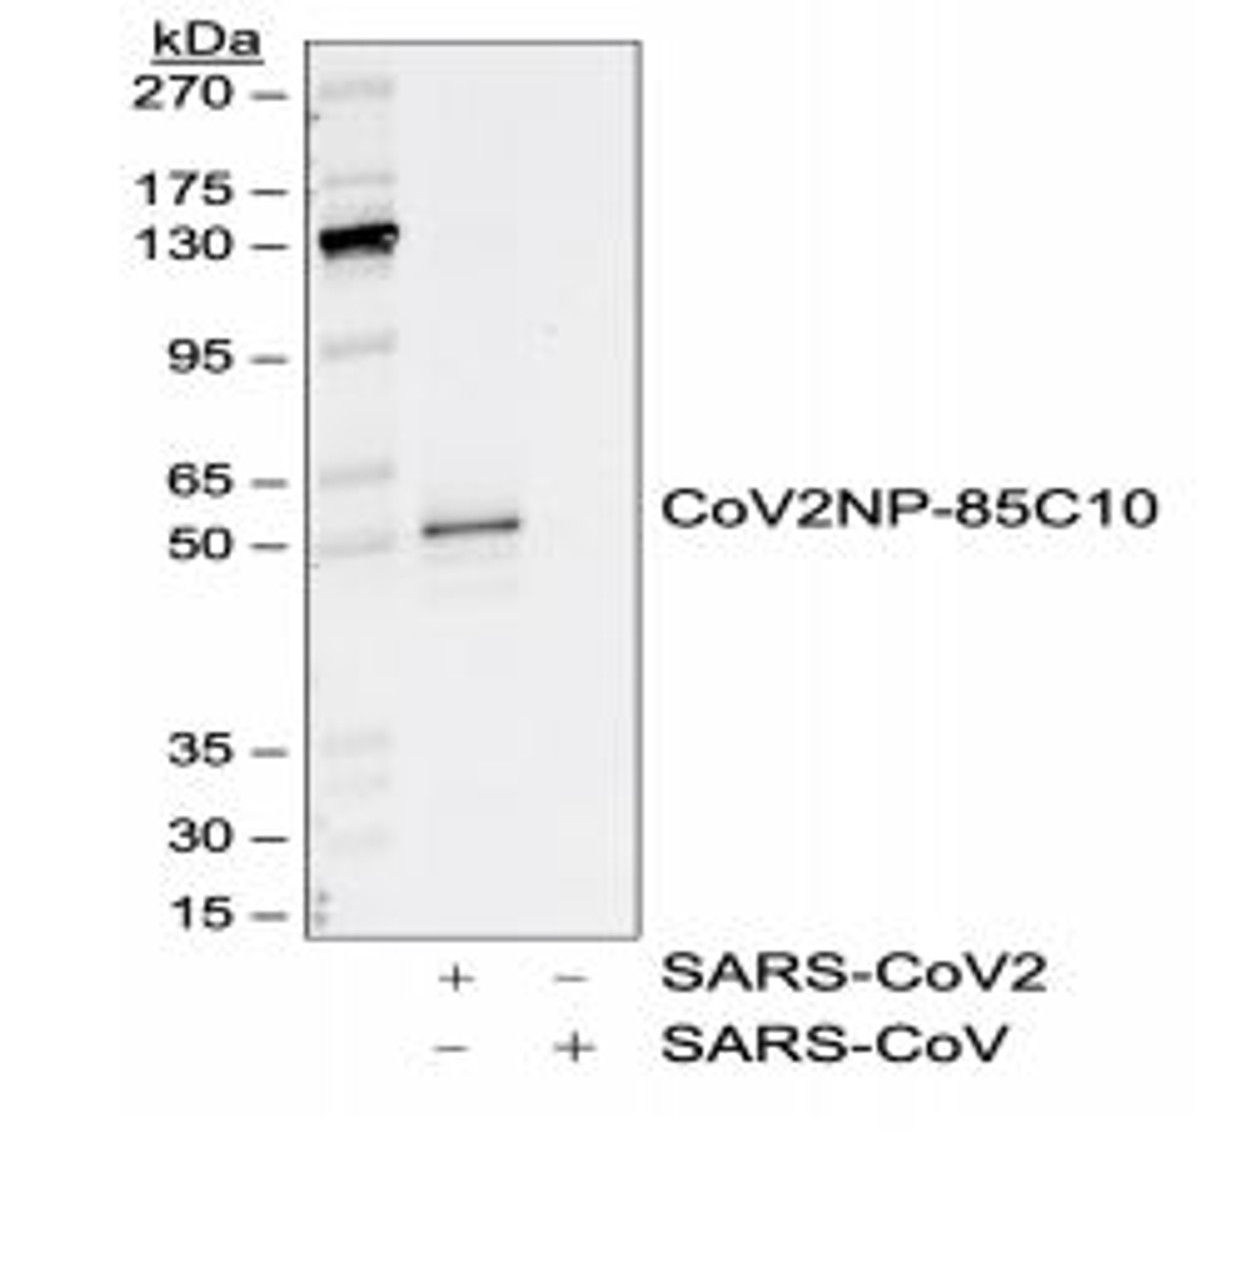 Western blot analysis of SARS-CoV2 and SARS-CoV nucleocapsid protein (50 ng) probed with 1 ug/mL CoV2NP rabbit monoclonal antibody (85C10) , CoV2NP-85C10.